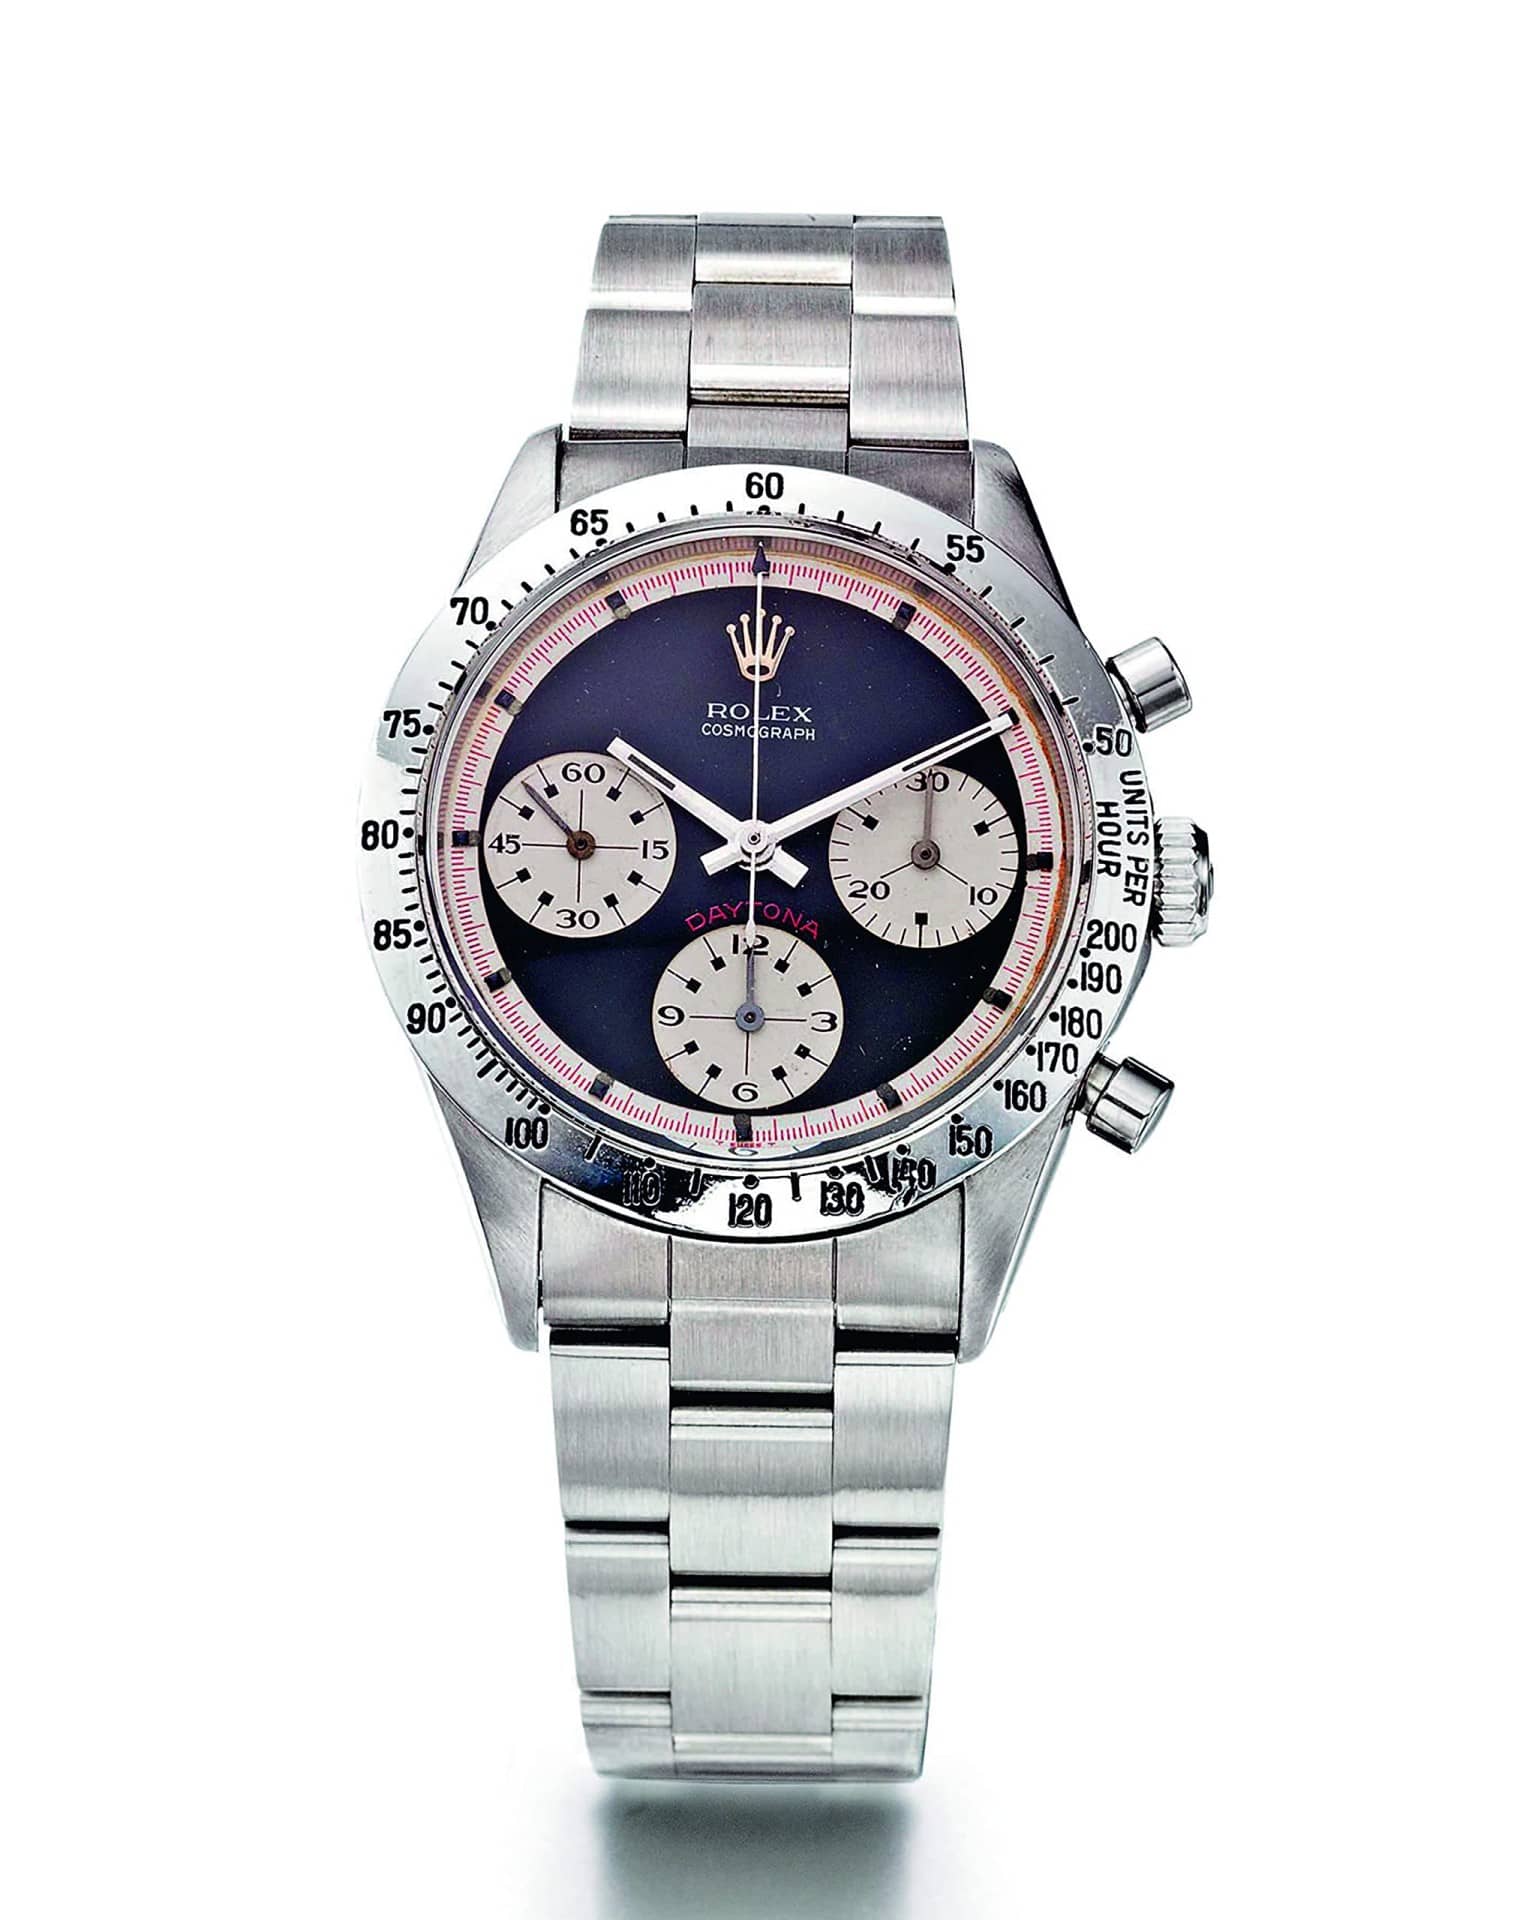 11576-rolex-investing-in-wristwatches-81oxv8h3t-l-jpg-81oxv8h3t-l